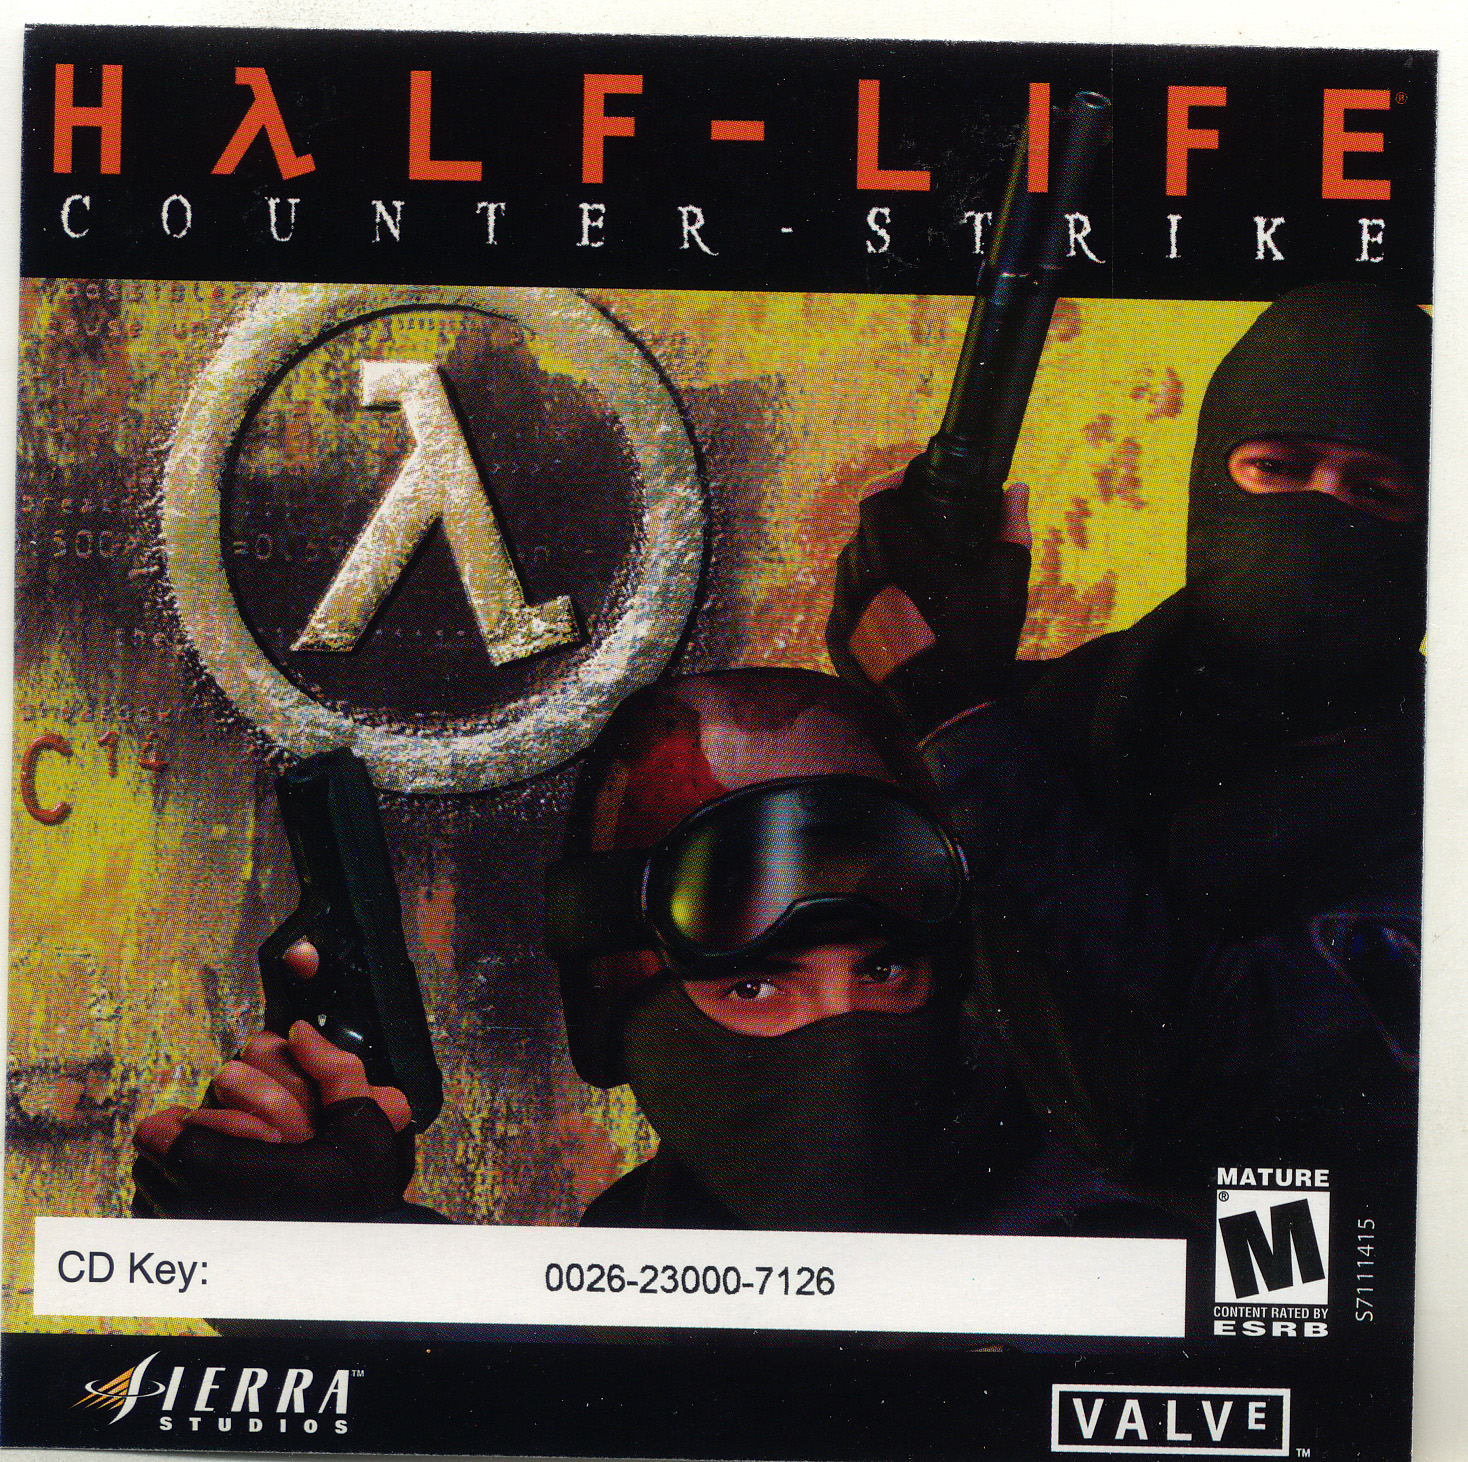 A_Sierra Half-Life Counter-Strike - Cover.jpg